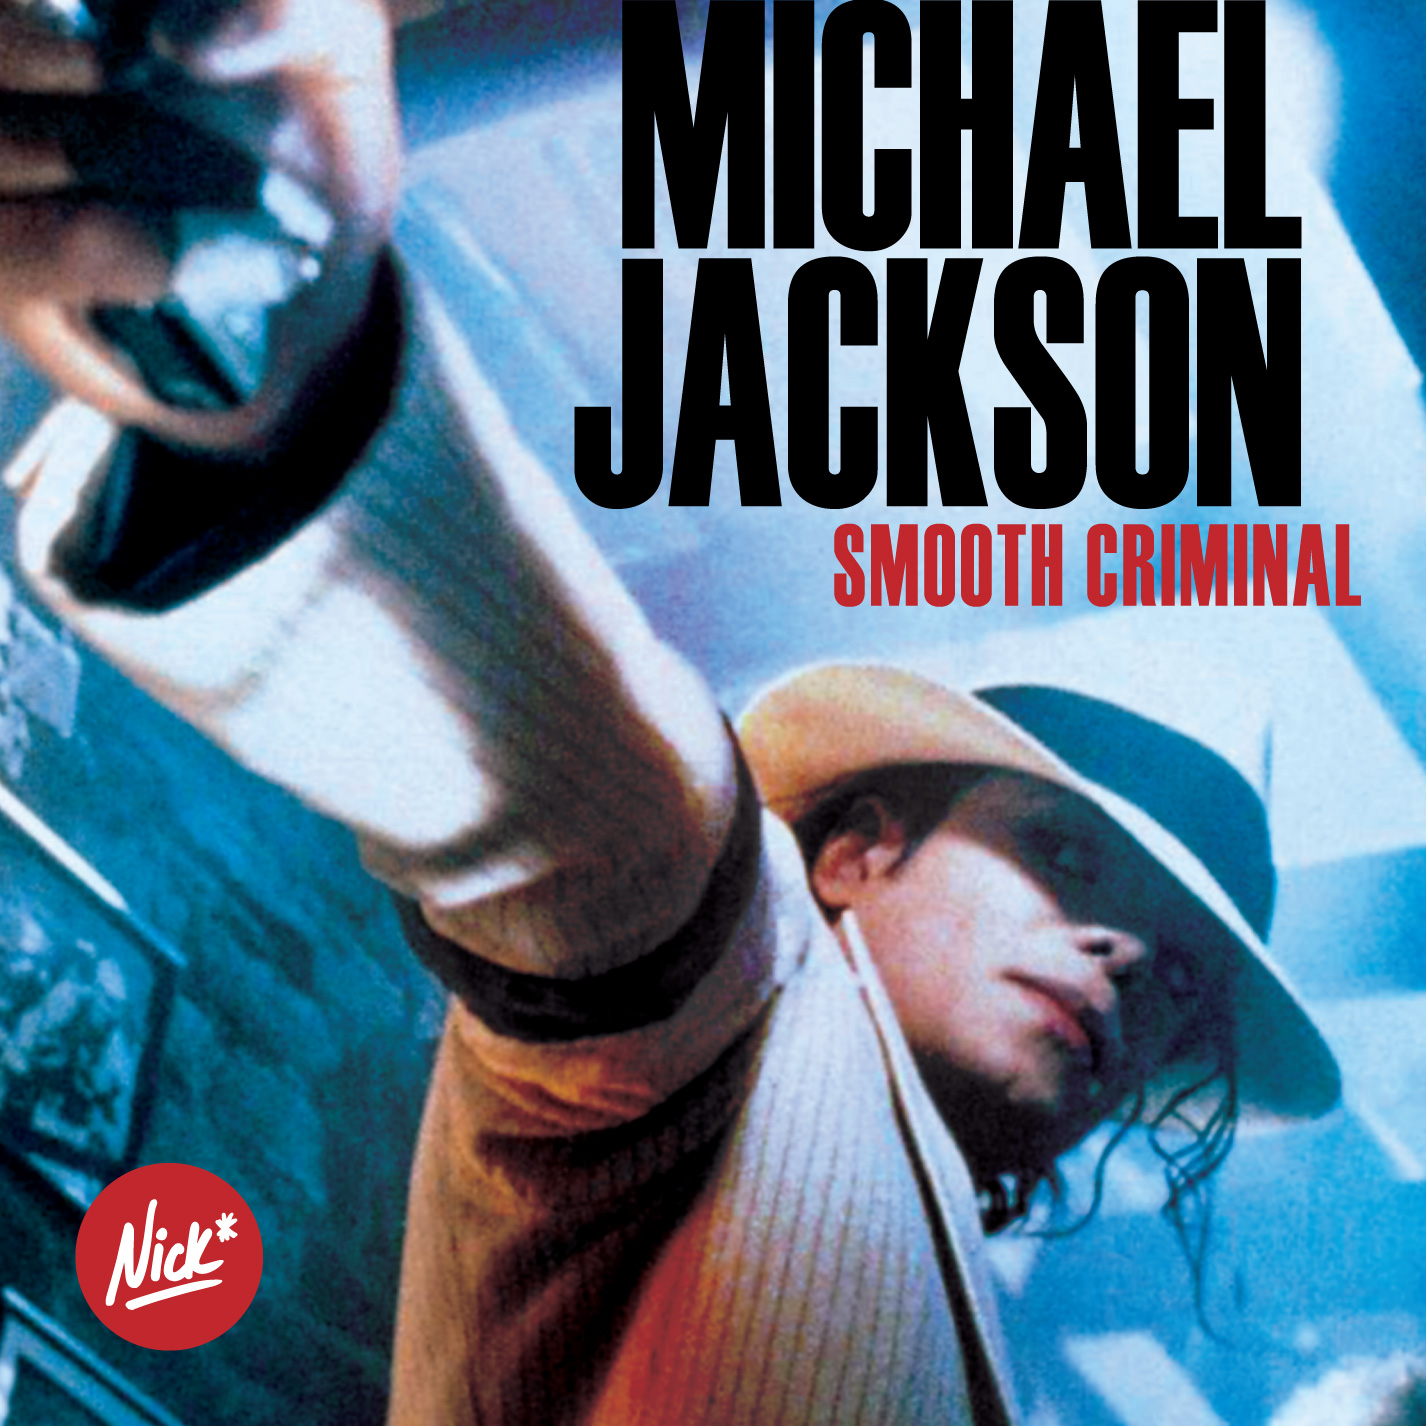 Michael Jackson - Smooth Criminal Nick* '87 Redux